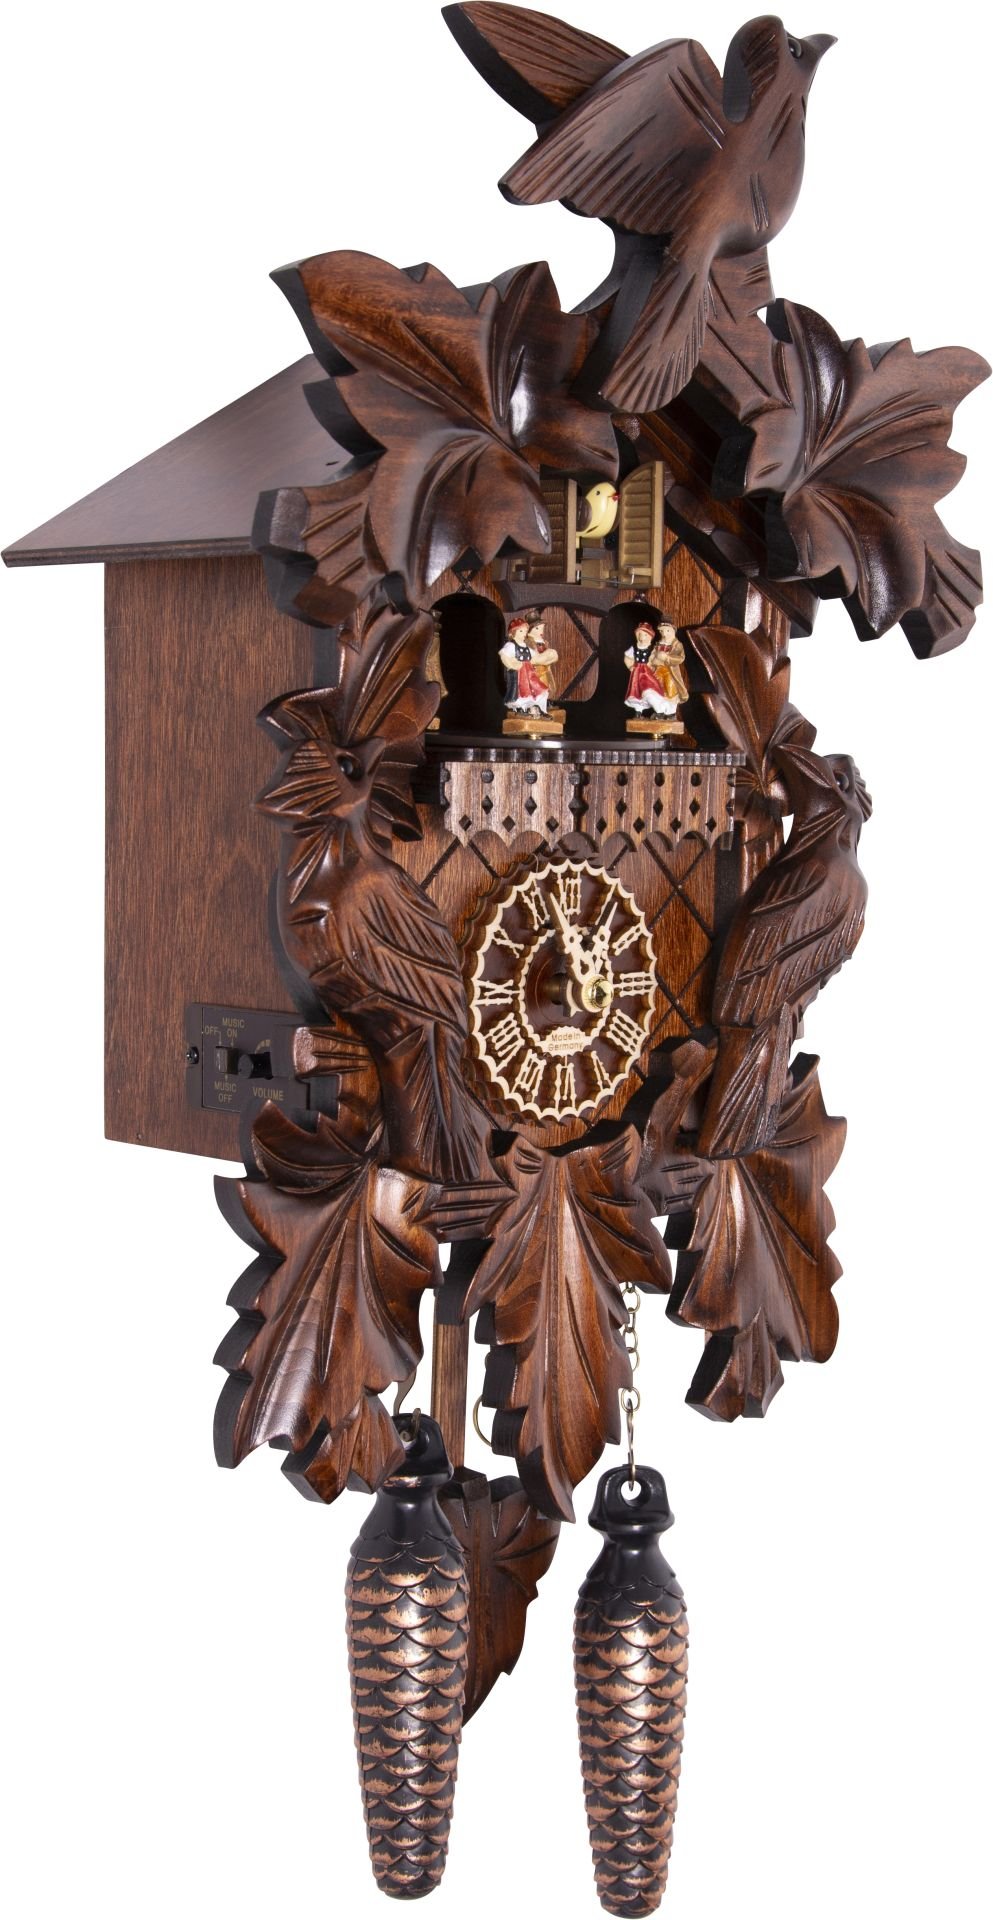 Orologio cucu tradizionale quarzo 35cm di Trenkle Uhren